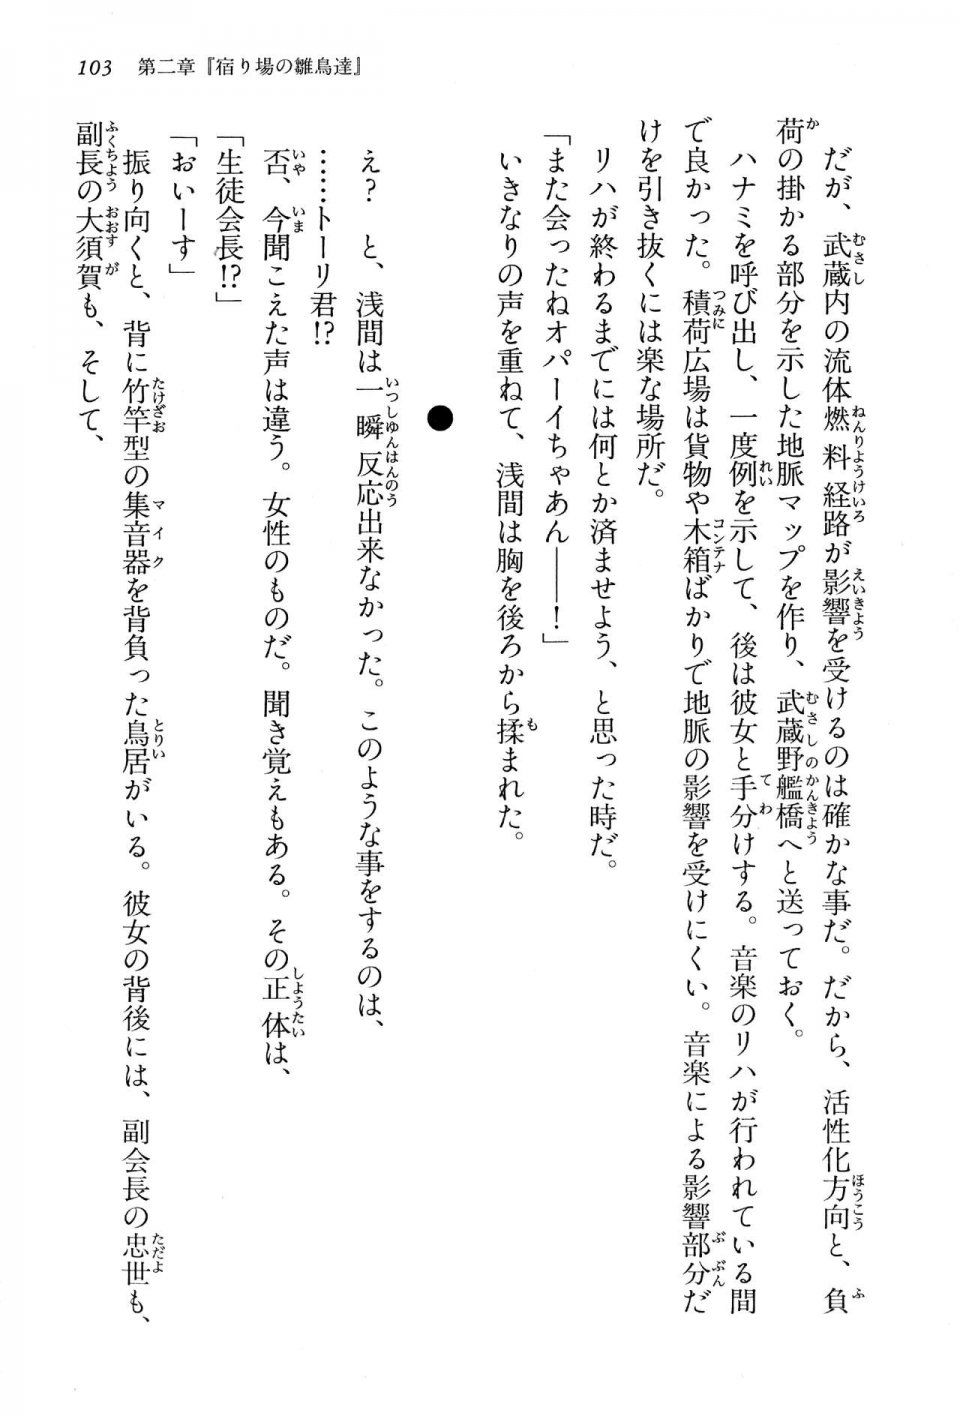 Kyoukai Senjou no Horizon BD Special Mininovel Vol 1(1A) - Photo #107